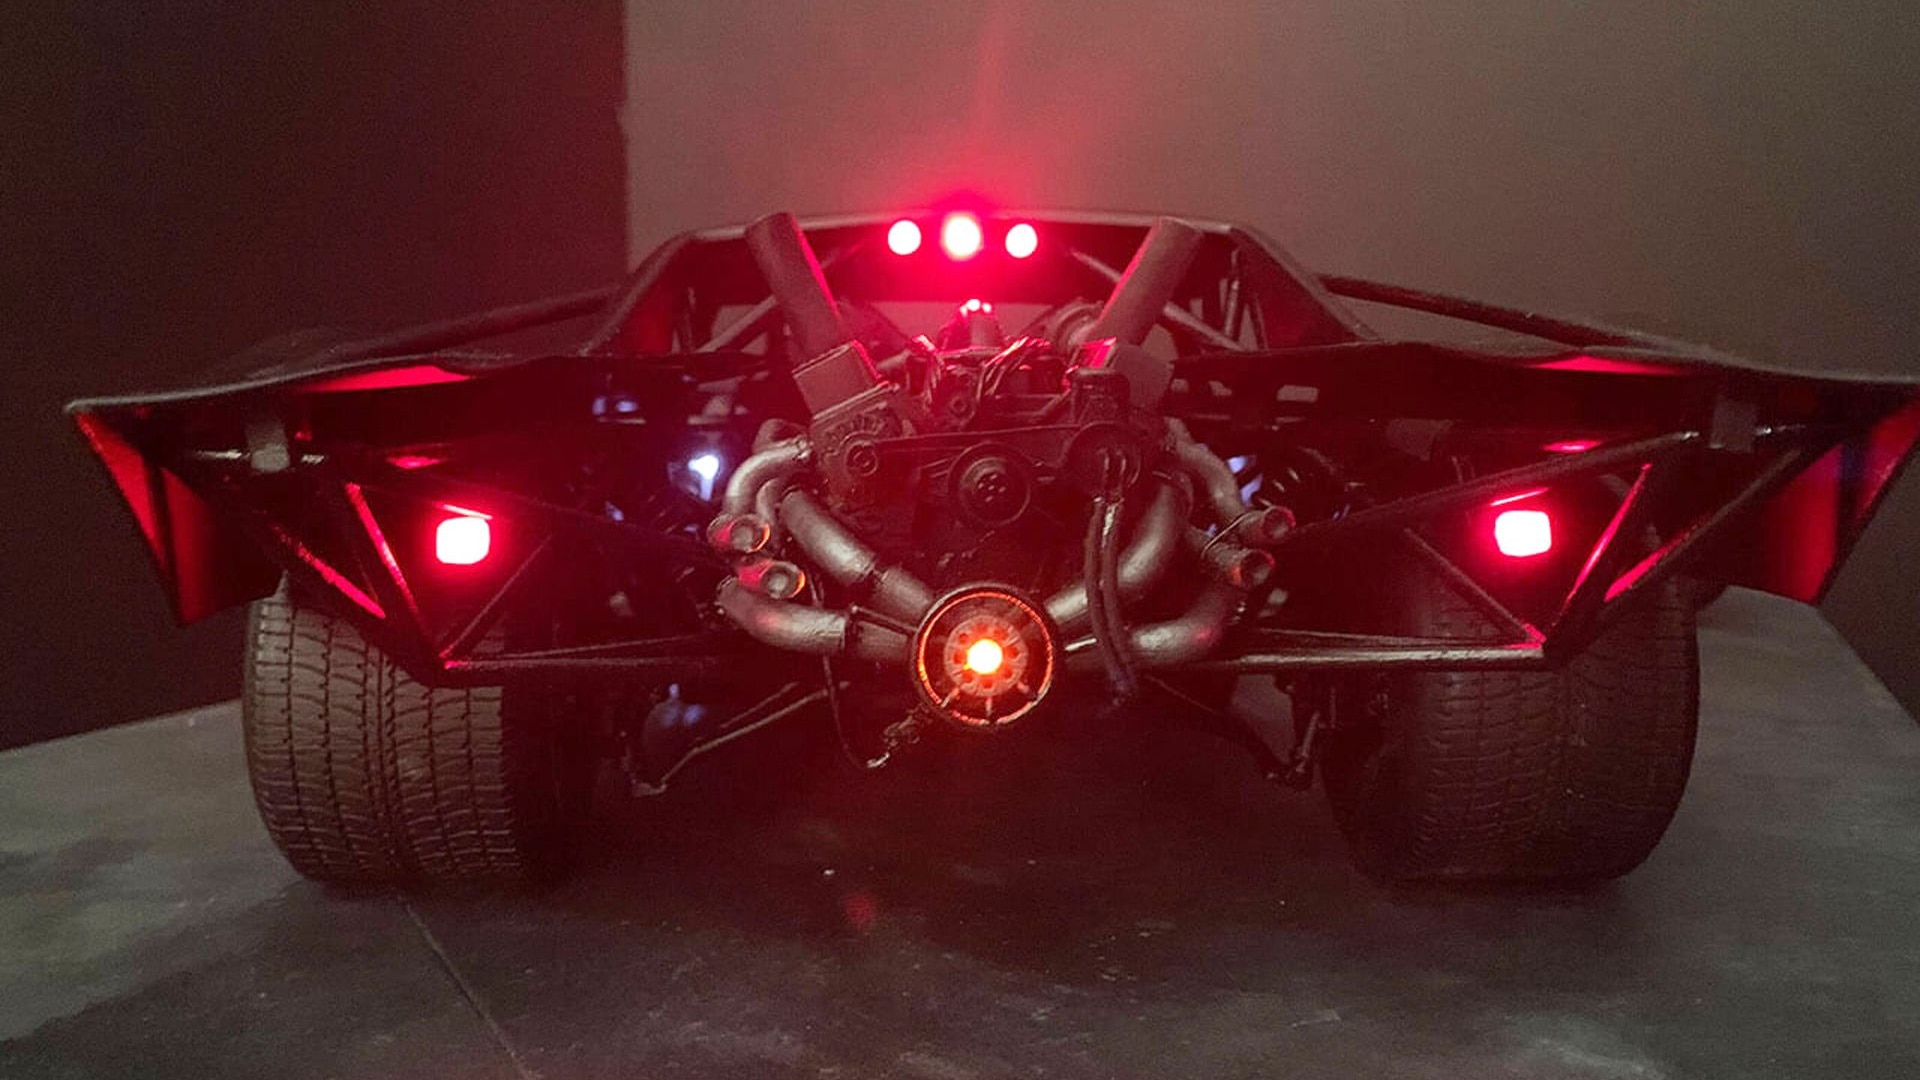 “The Batman” Batmobile - Photo credit: TheBatRobert/Twitter